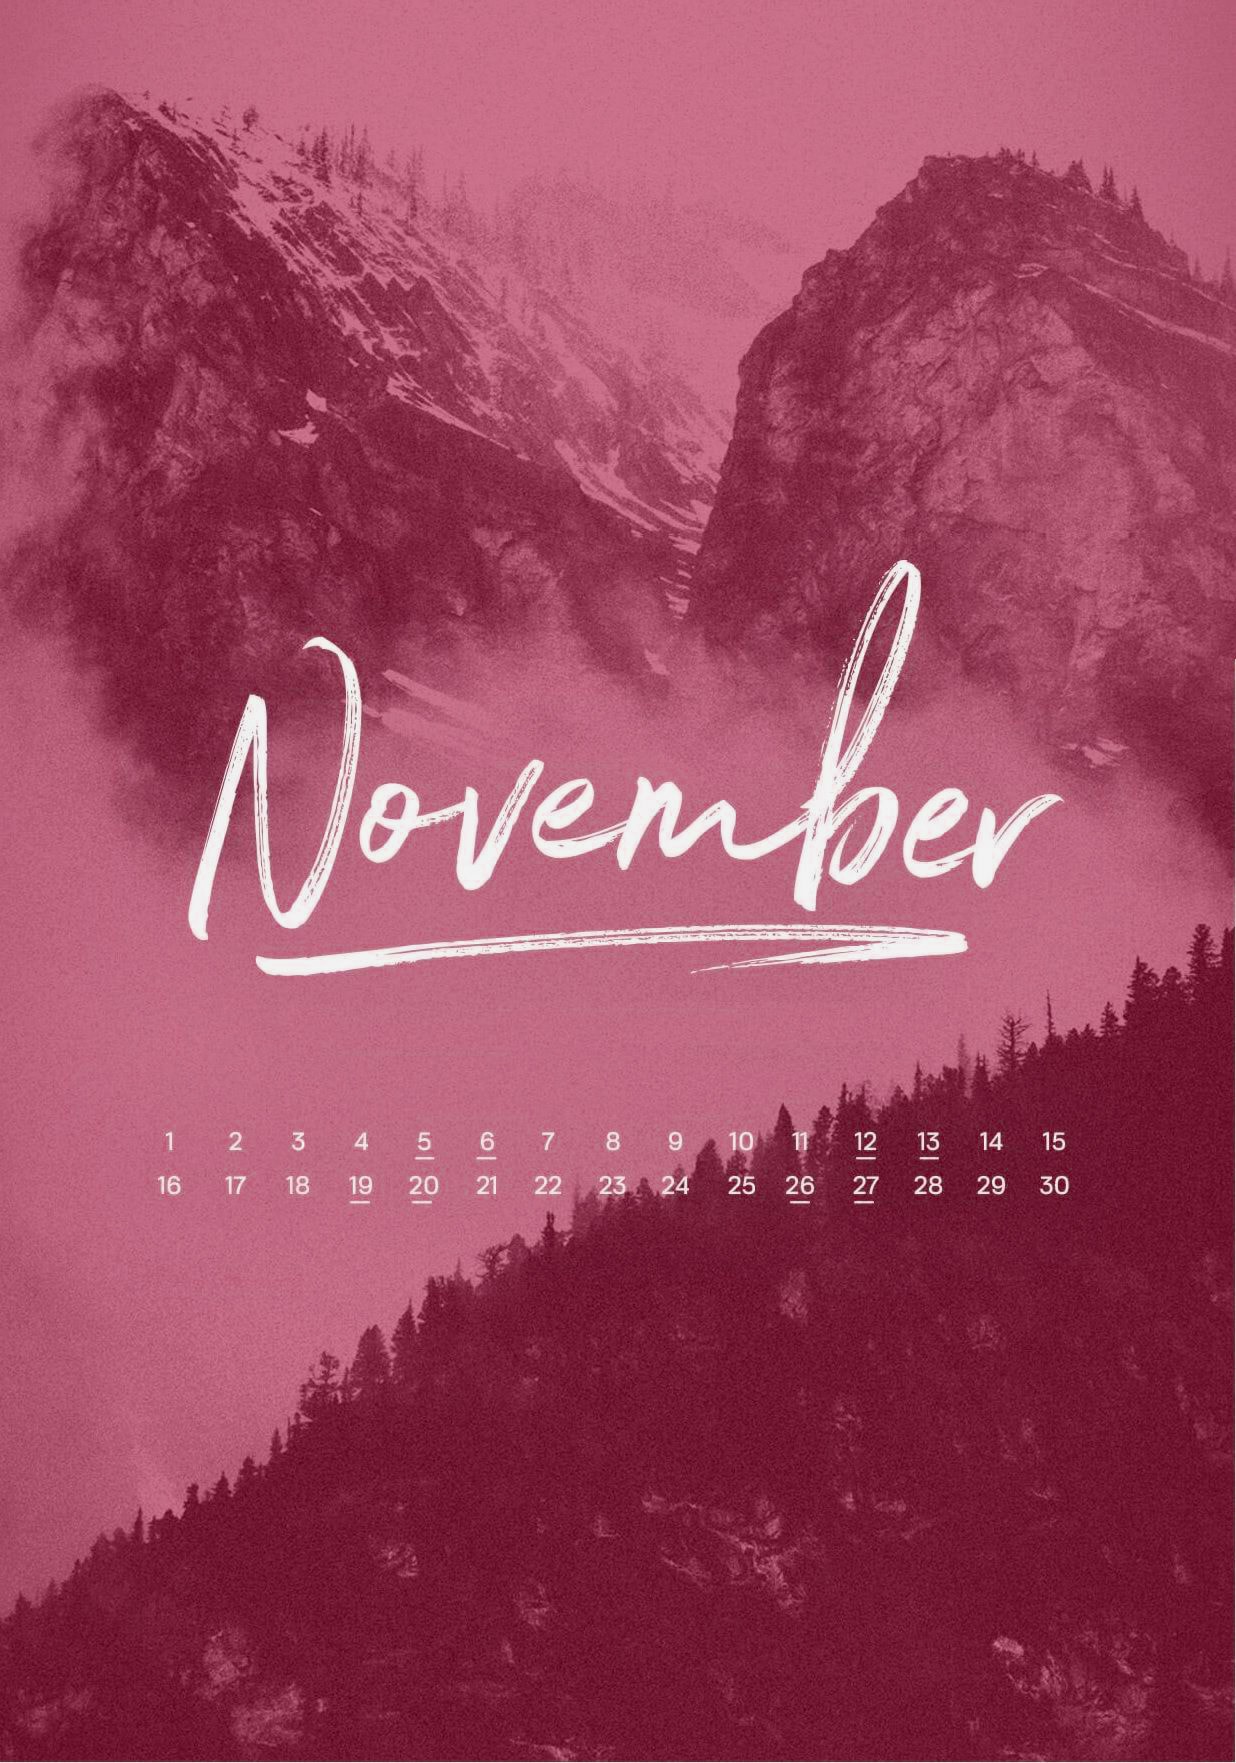 November Wallpapers 2